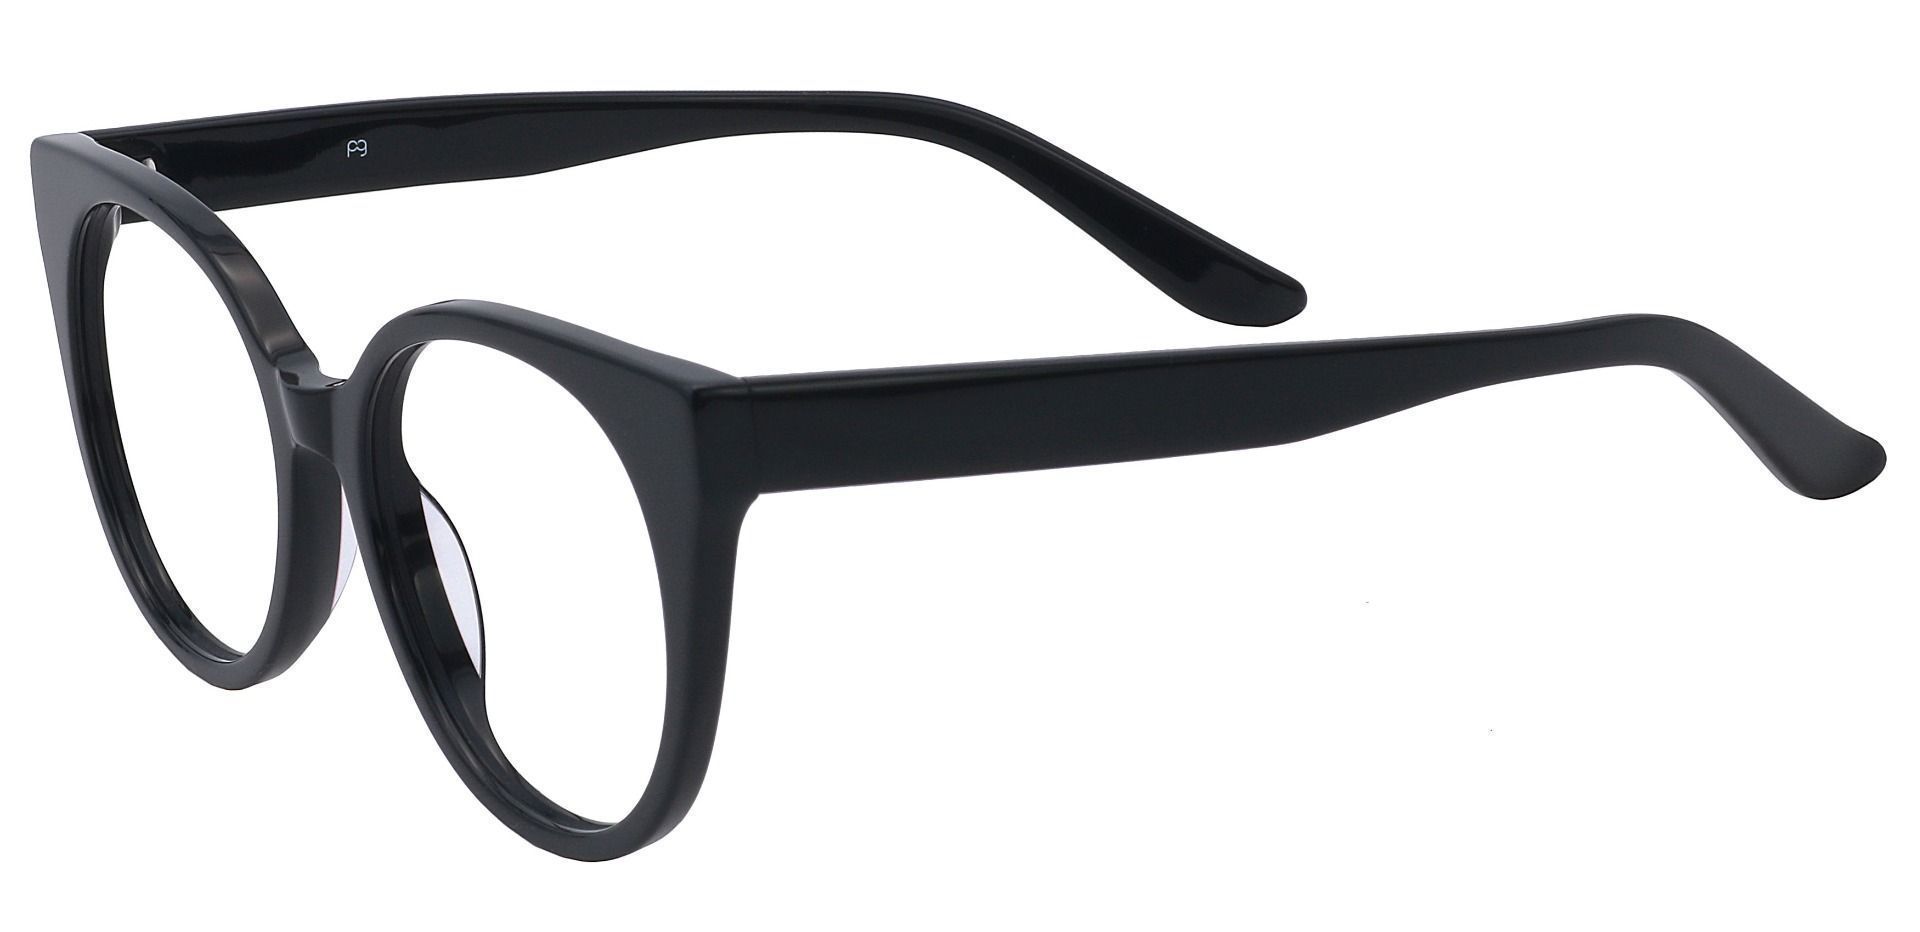 Balmoral Cat-Eye Non-Rx Glasses - Black